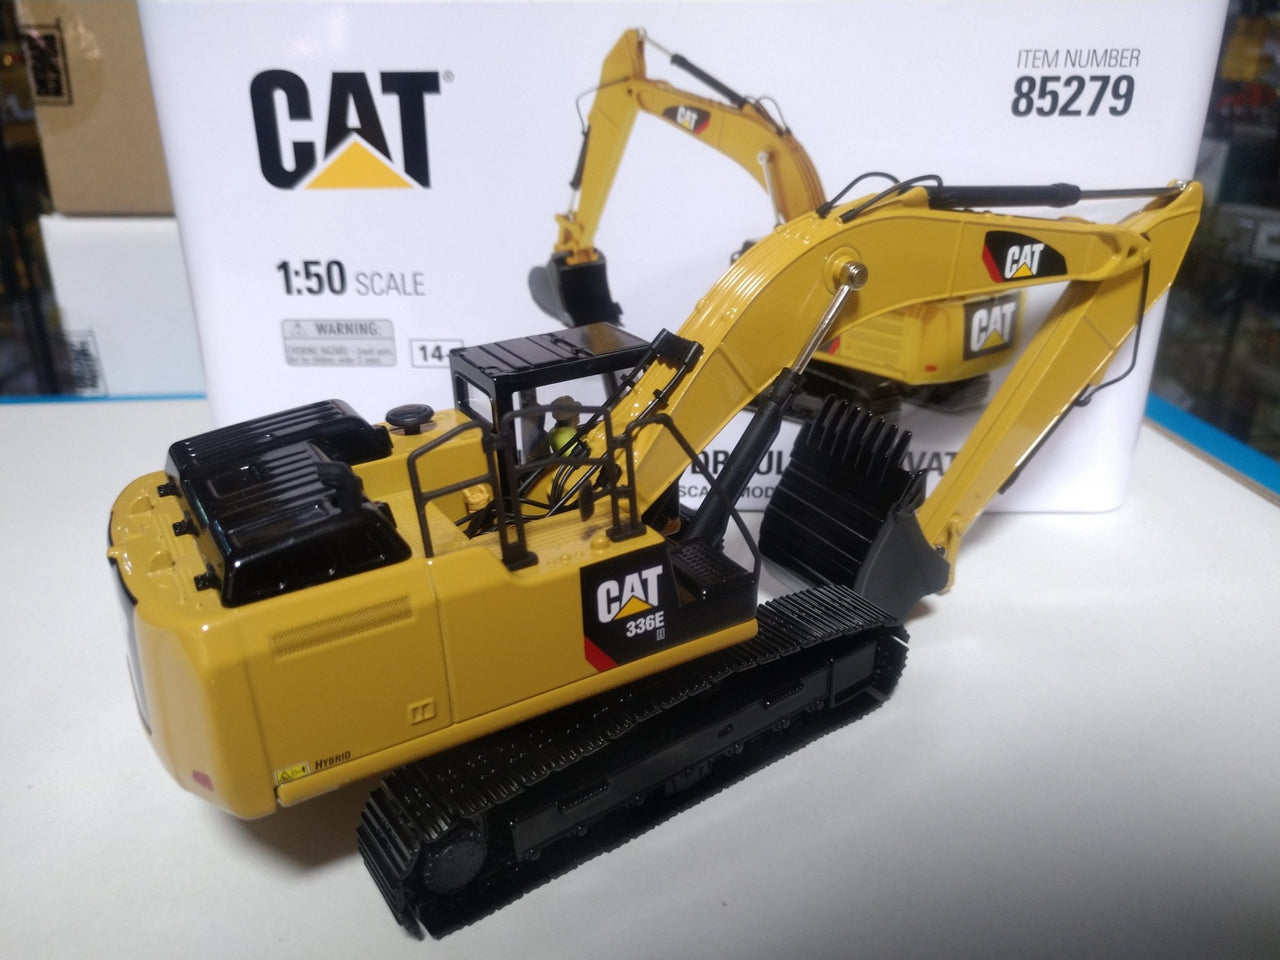 85279 Caterpillar 336E H Hydraulic Excavator Scale 1:50